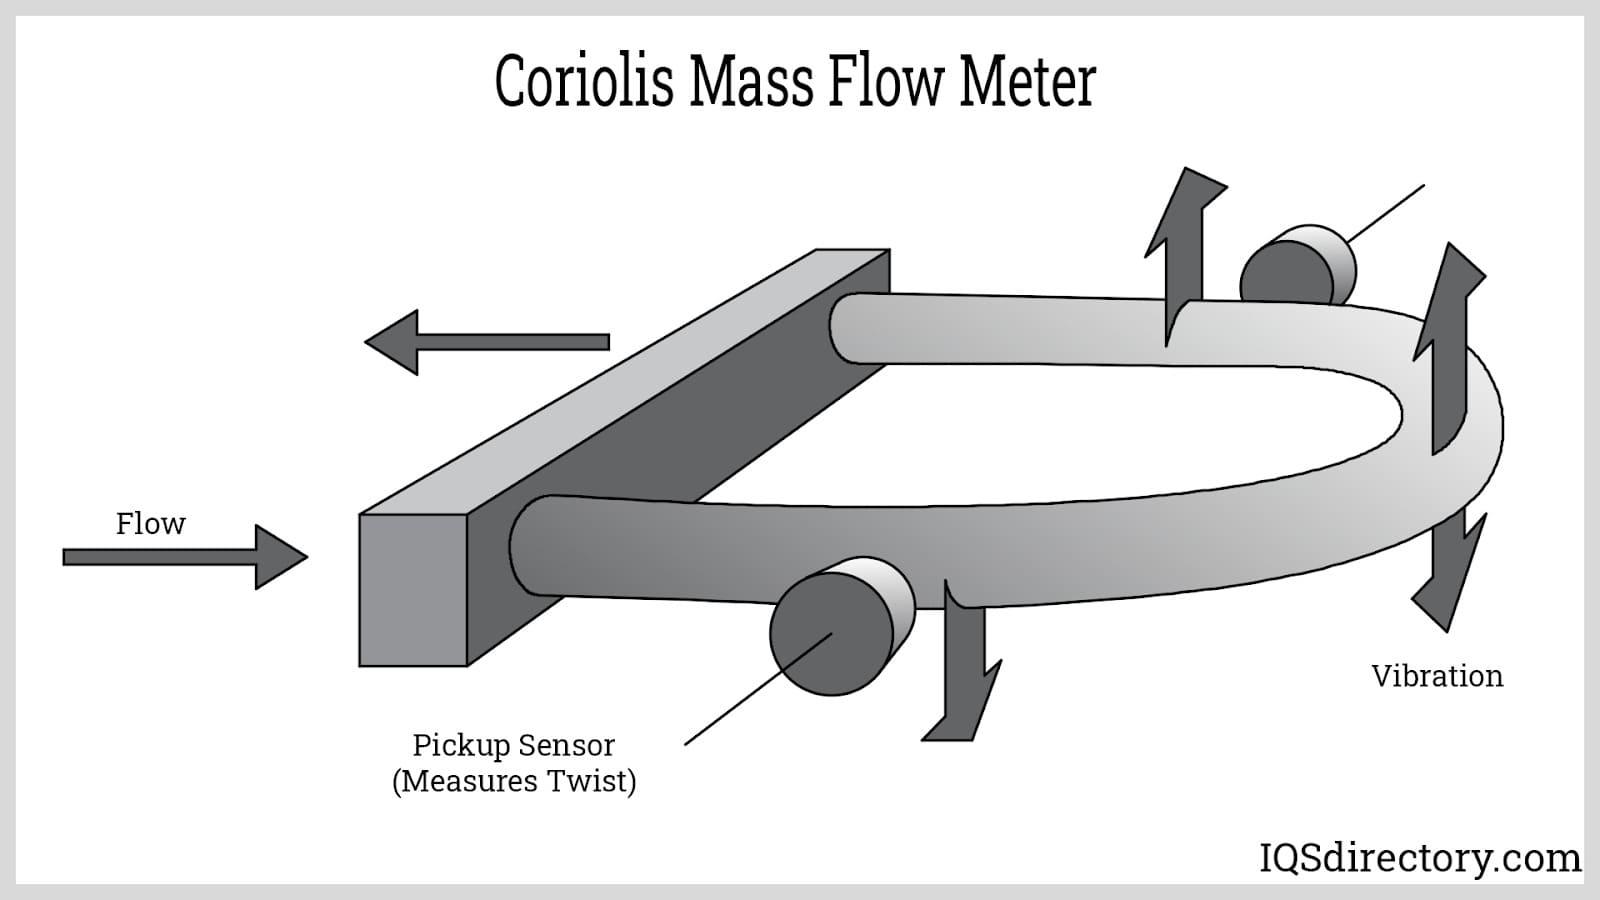 The Coriolis Principle of the mass flow meter